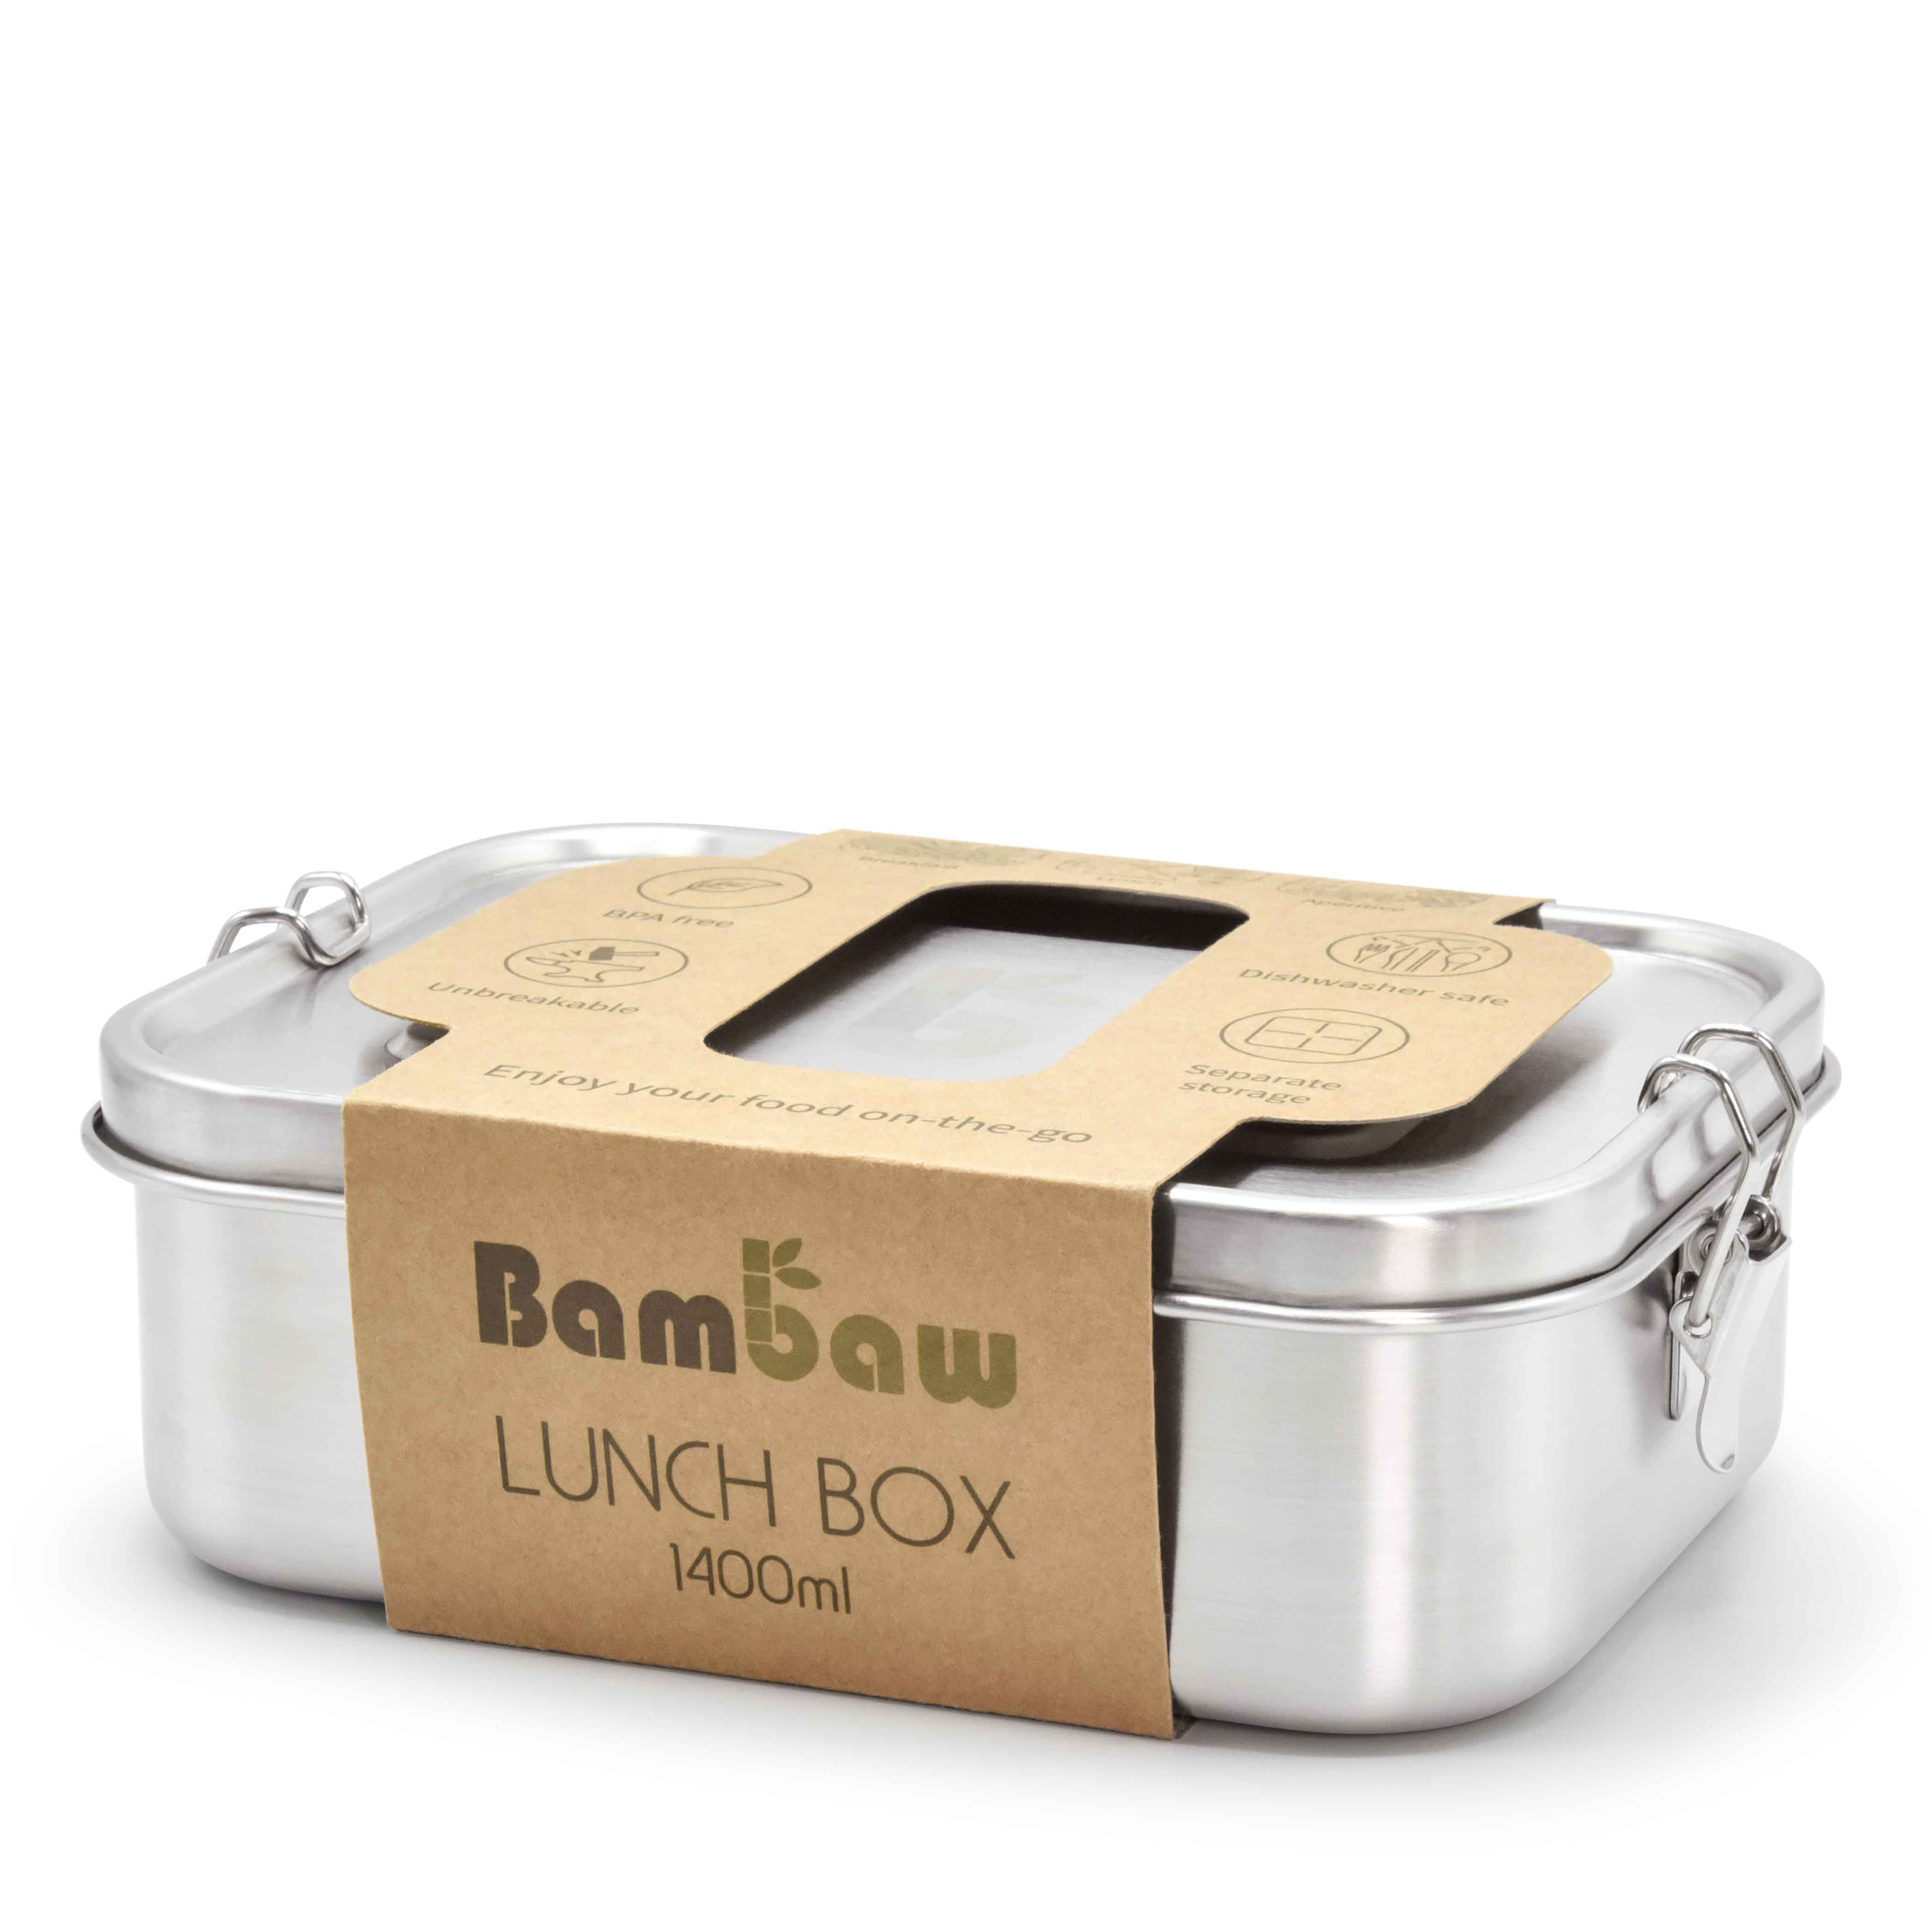 Bambaw-Lunchbox-LM-1400-1